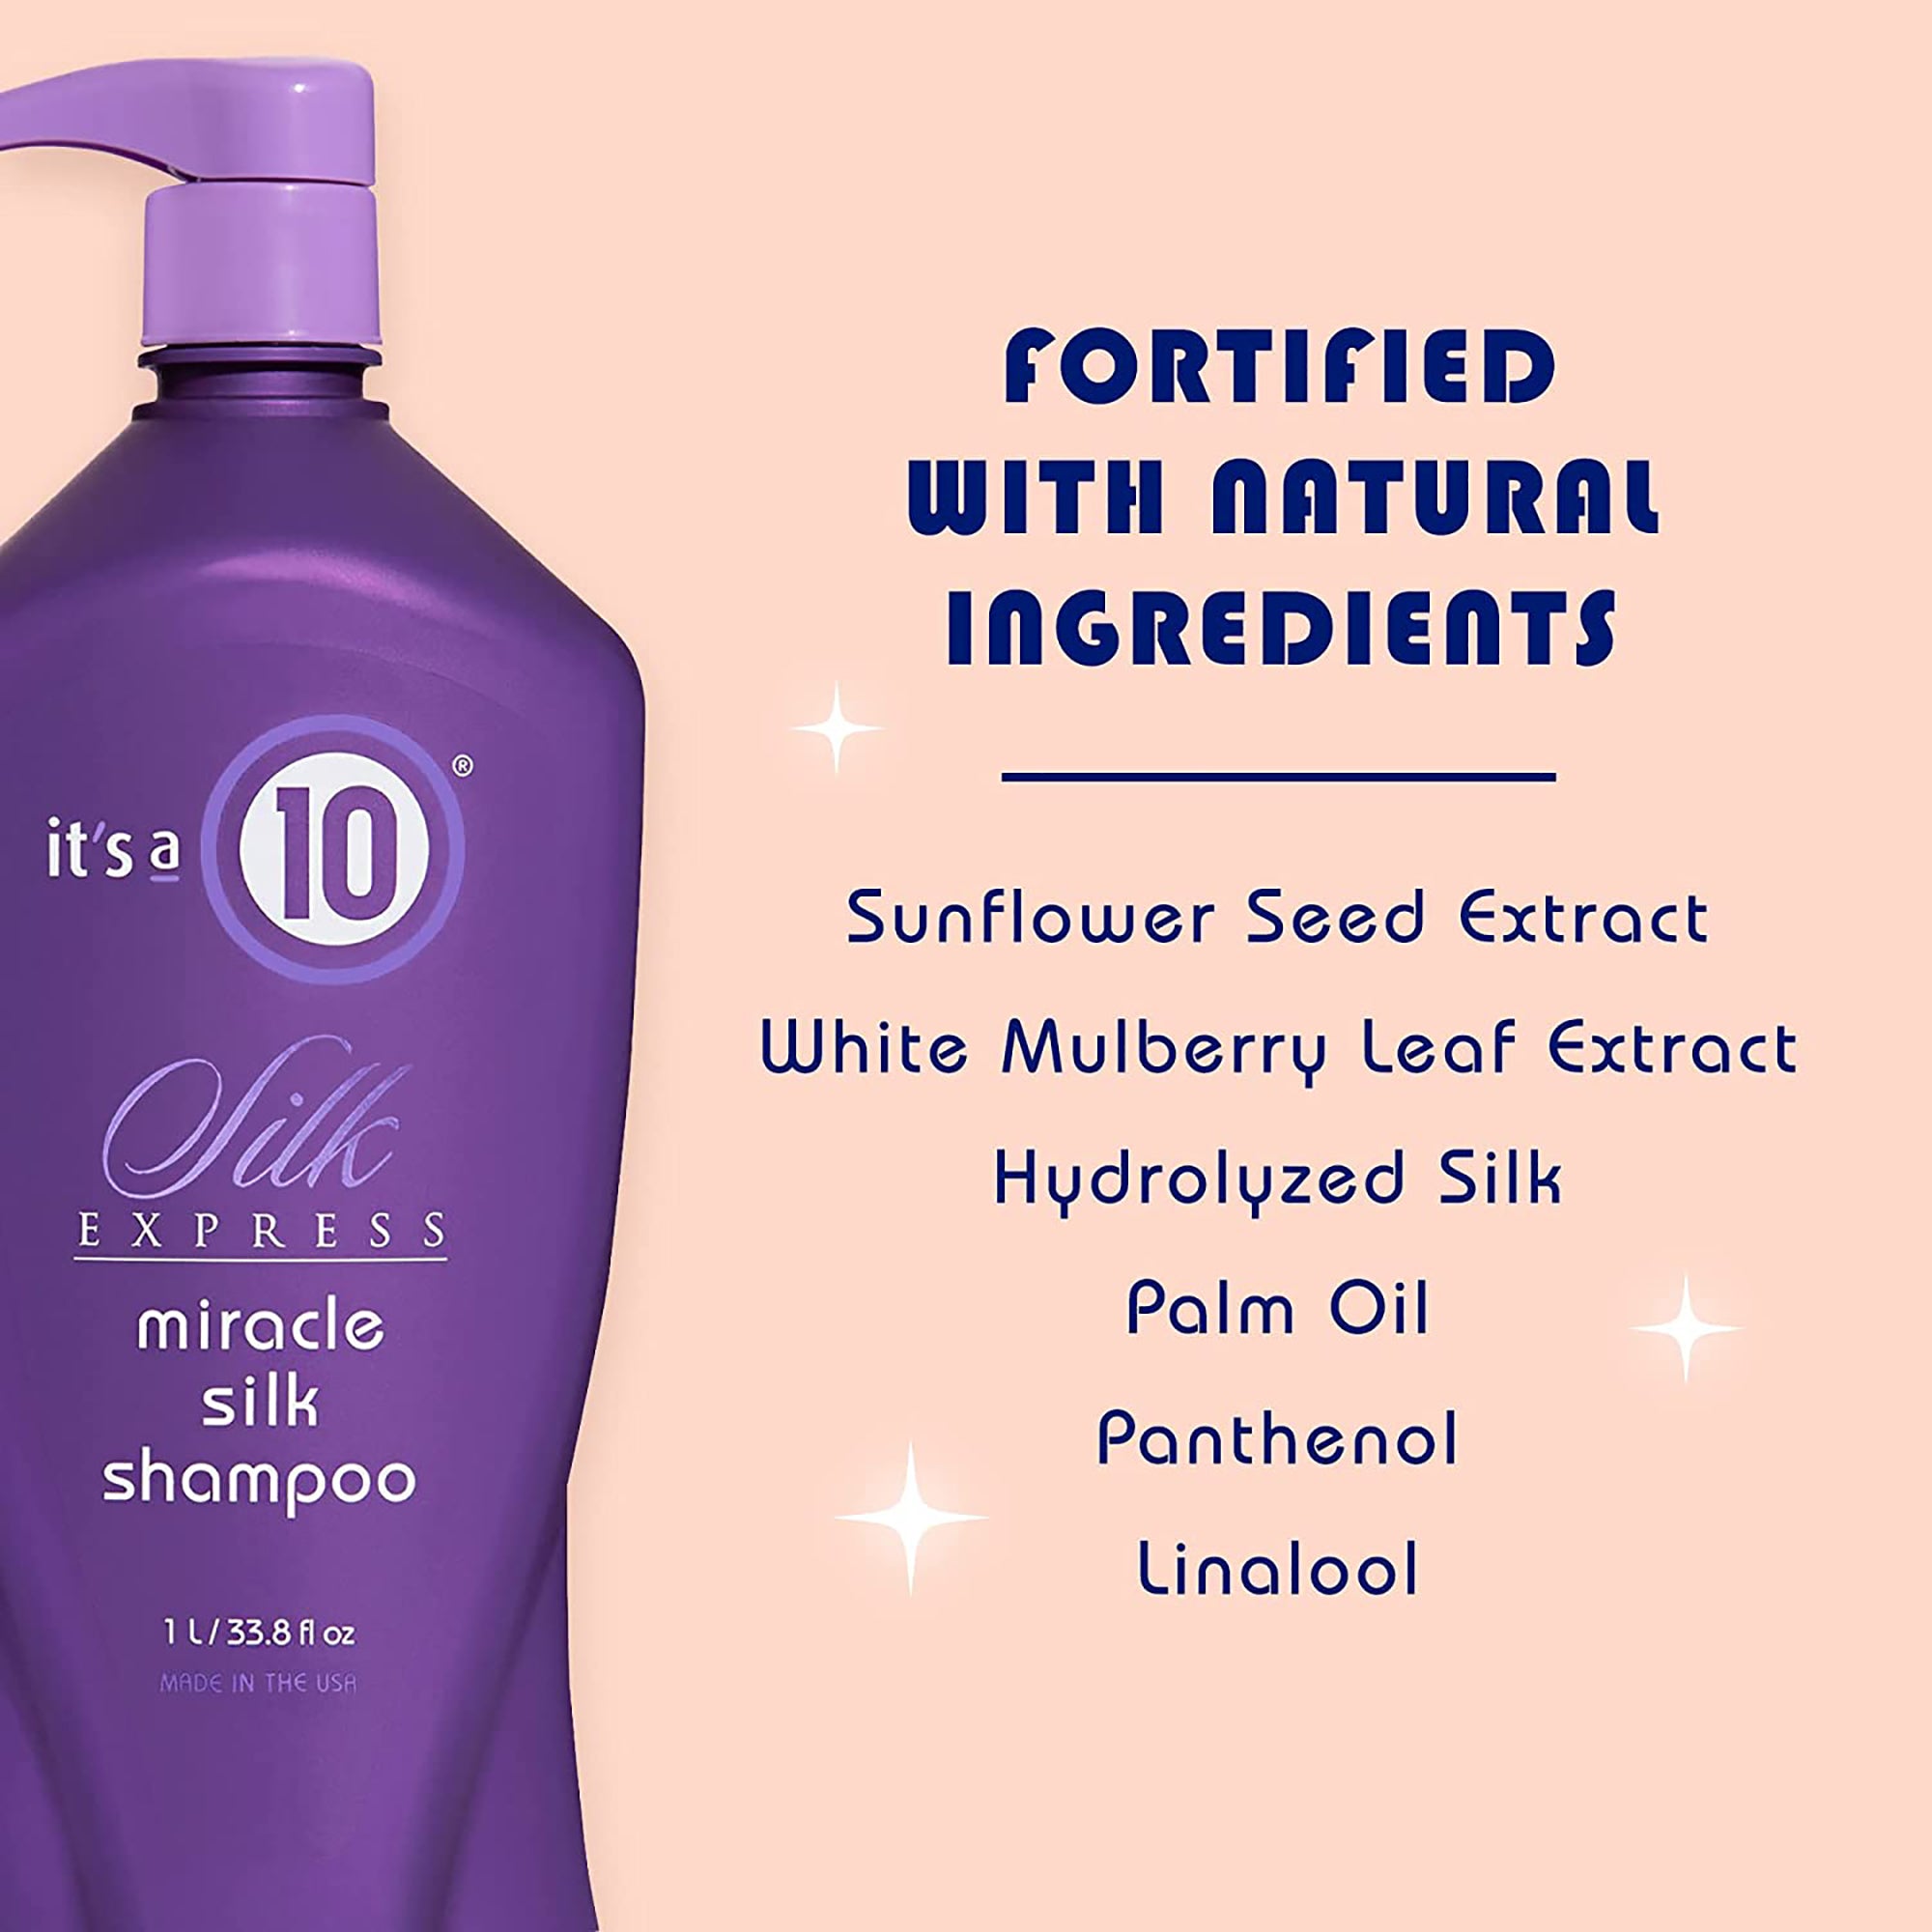 It's a 10 Silk Express Miracle Silk Shampoo - 33oz / 33.OZ